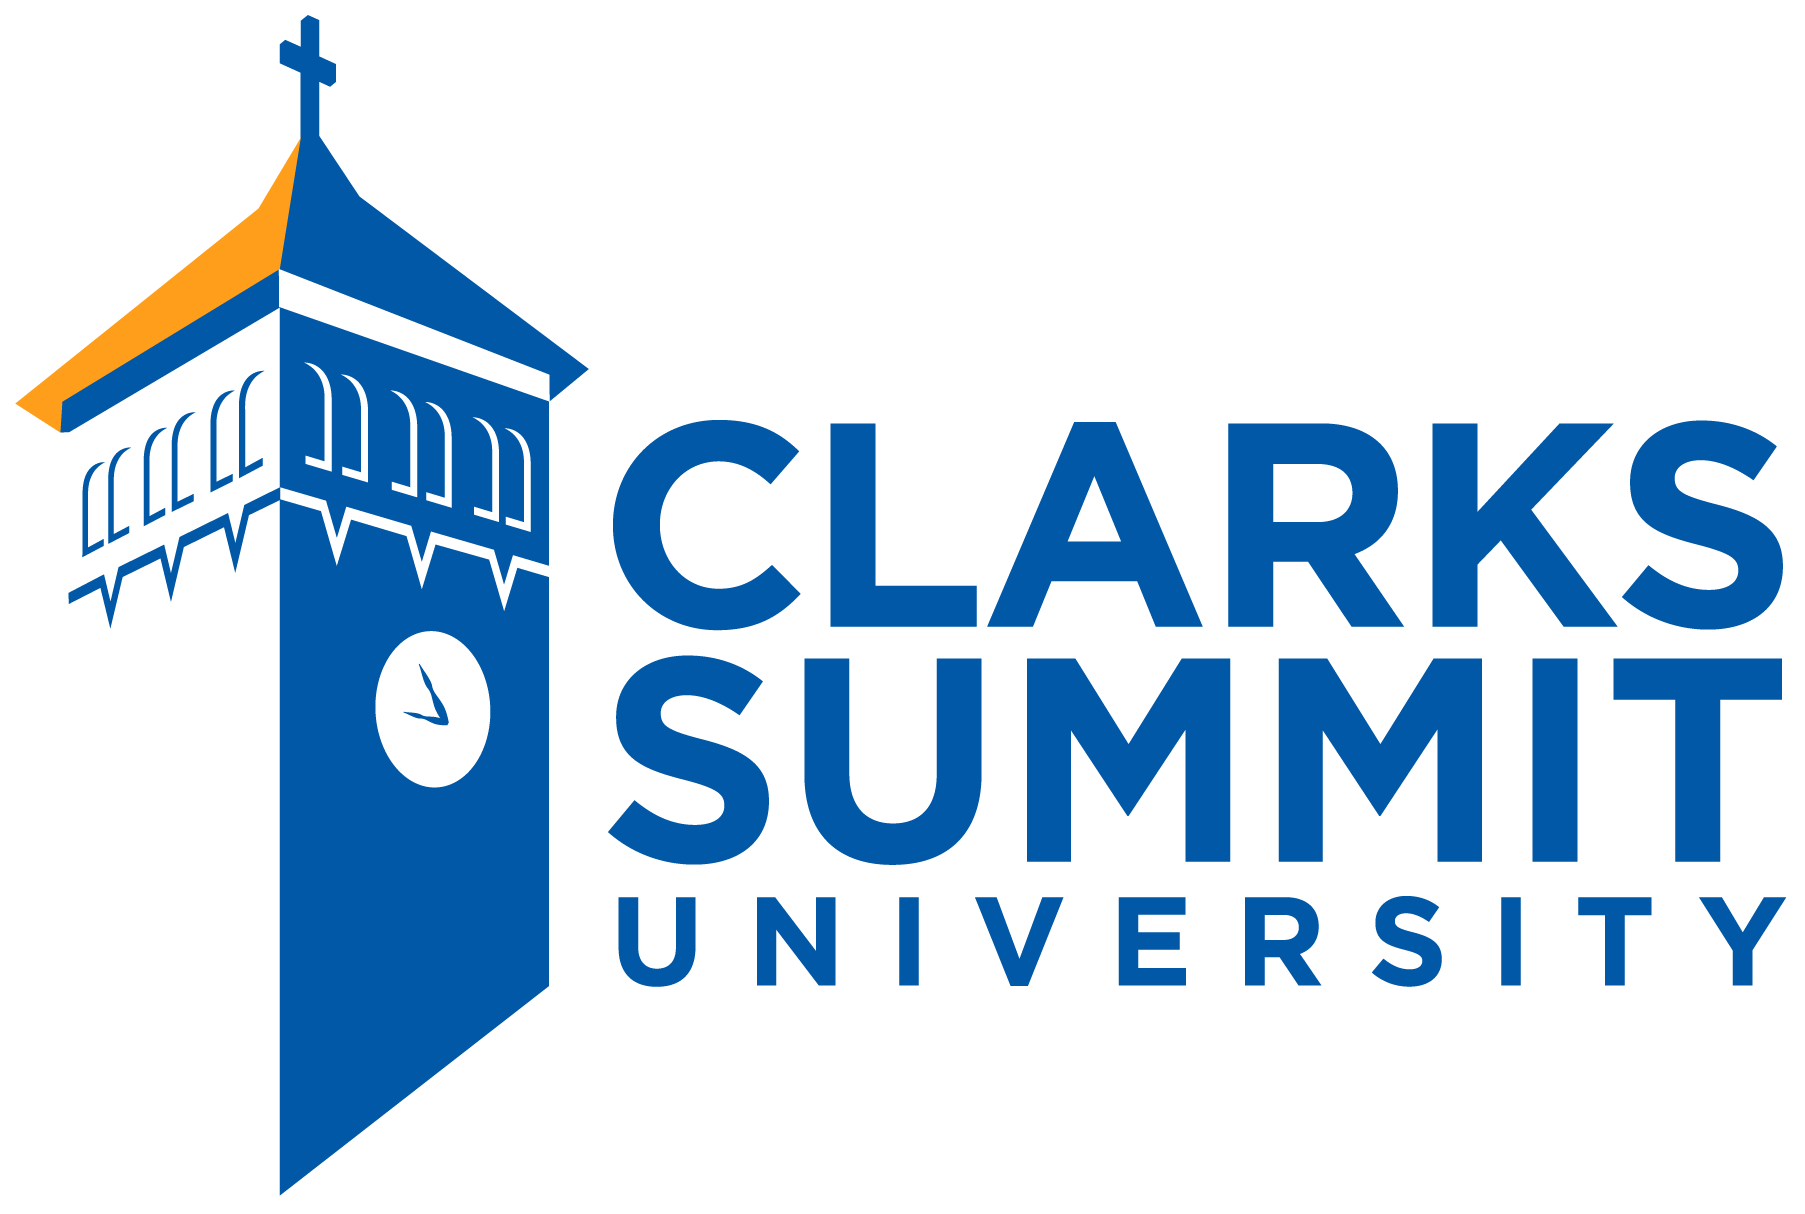 Clarks Summit University Information | About Summit University | Find Colleges